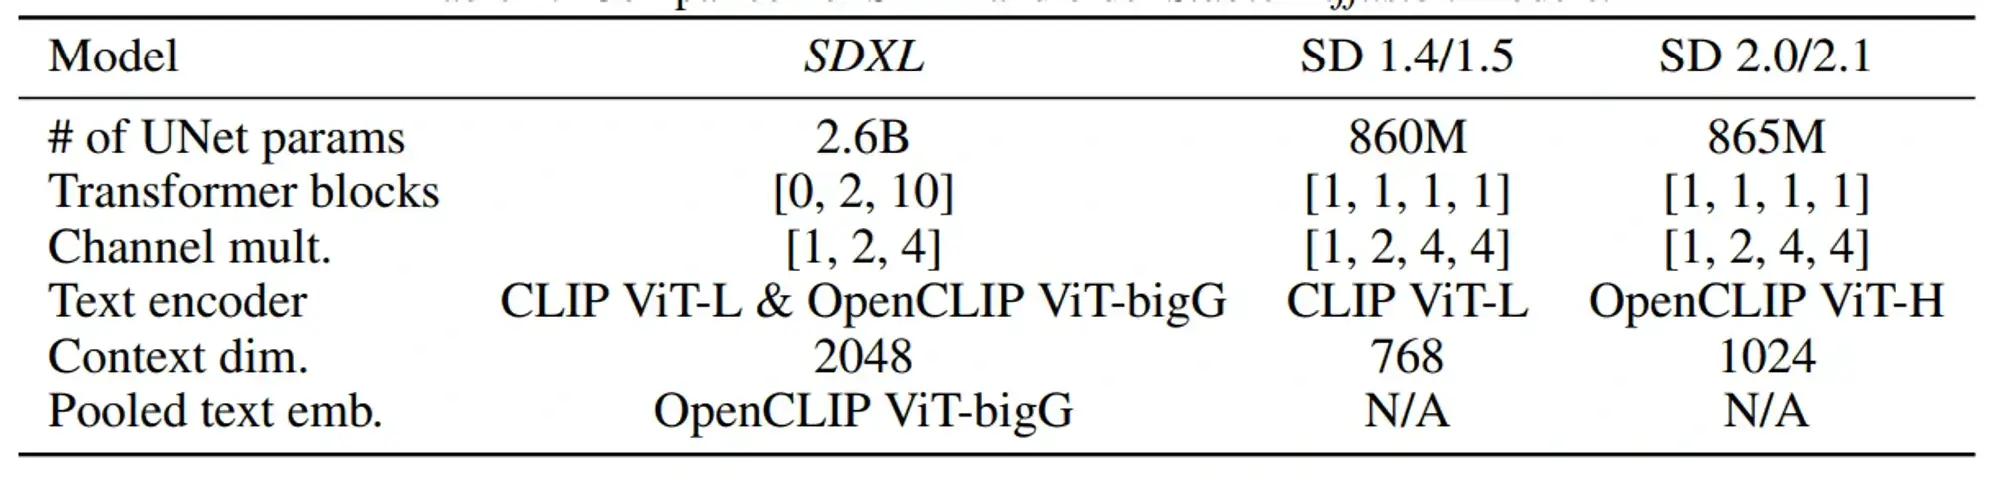 Evaluation of SDXL model